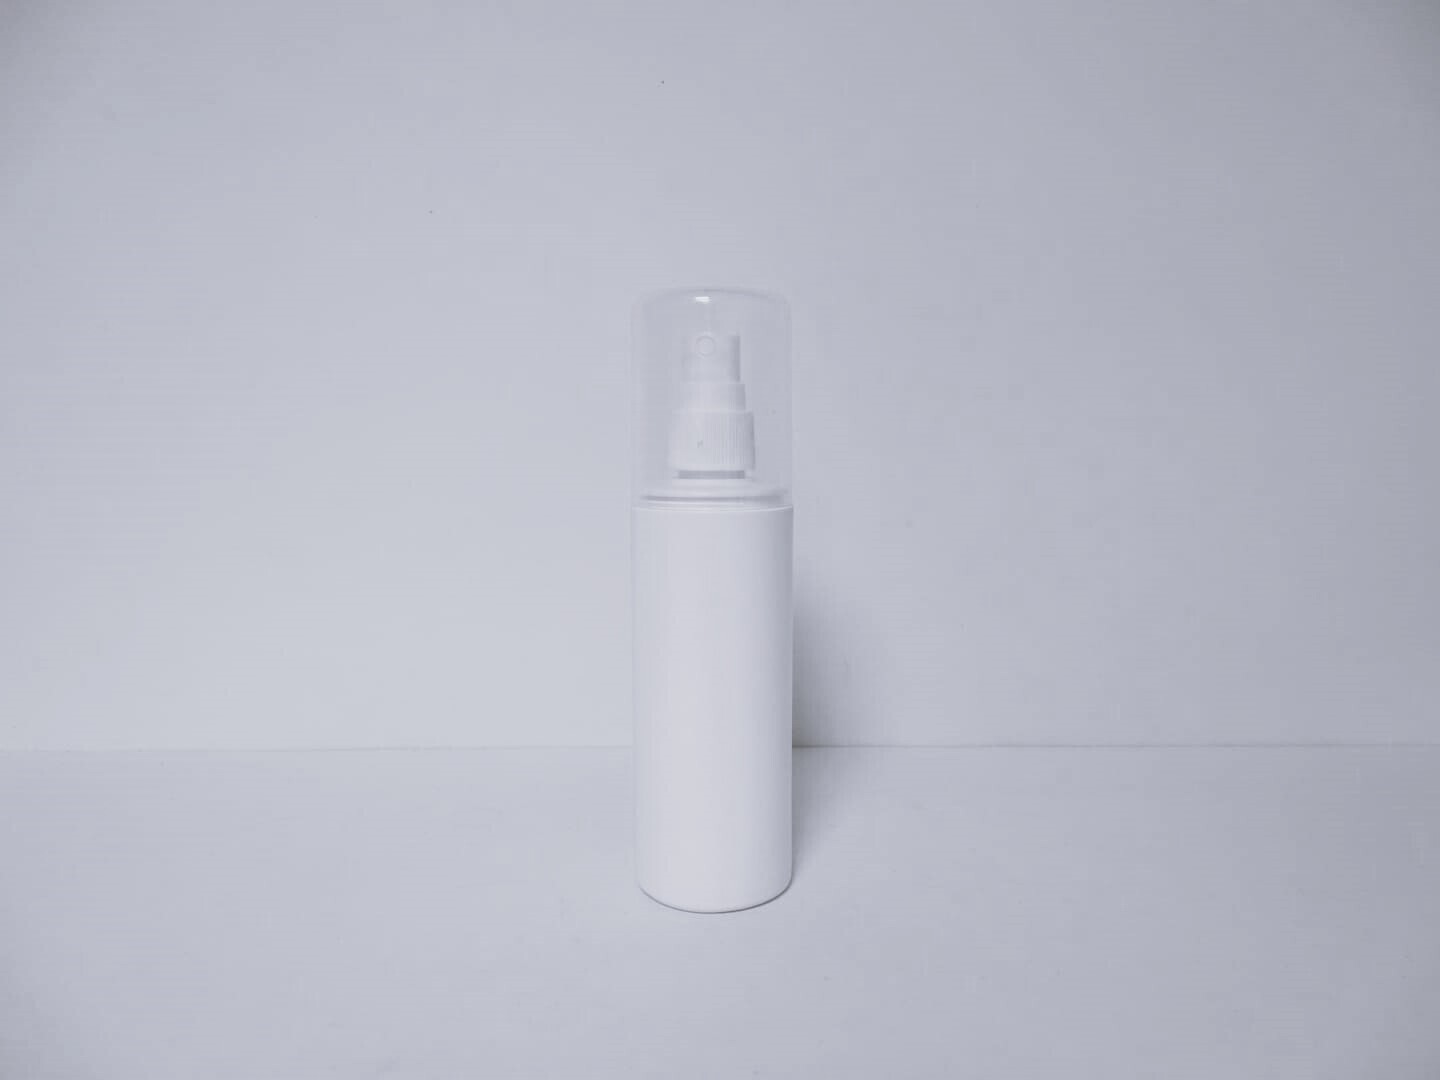 Botella plástico blanca cilíndrica 125 ml con atomizador y capuchón.